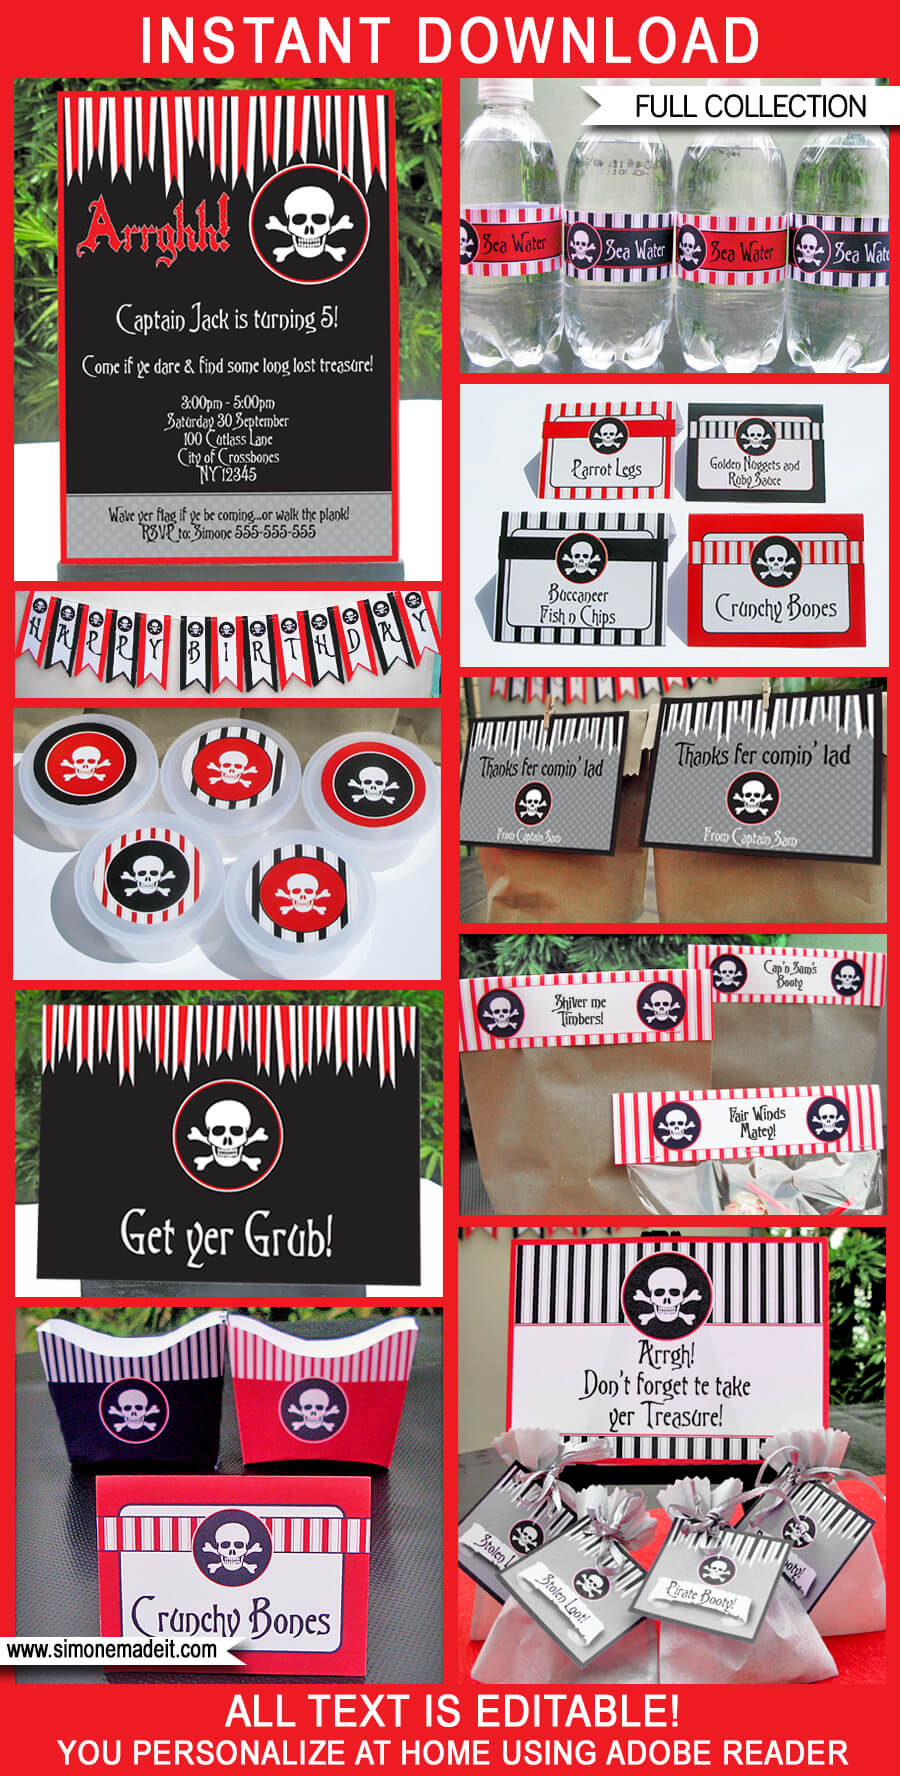 Pirate Party Printables, Invitations & Decorations | Editable Birthday Party Theme Templates | INSTANT DOWNLOAD $12.50 via SIMONEmadeit.com